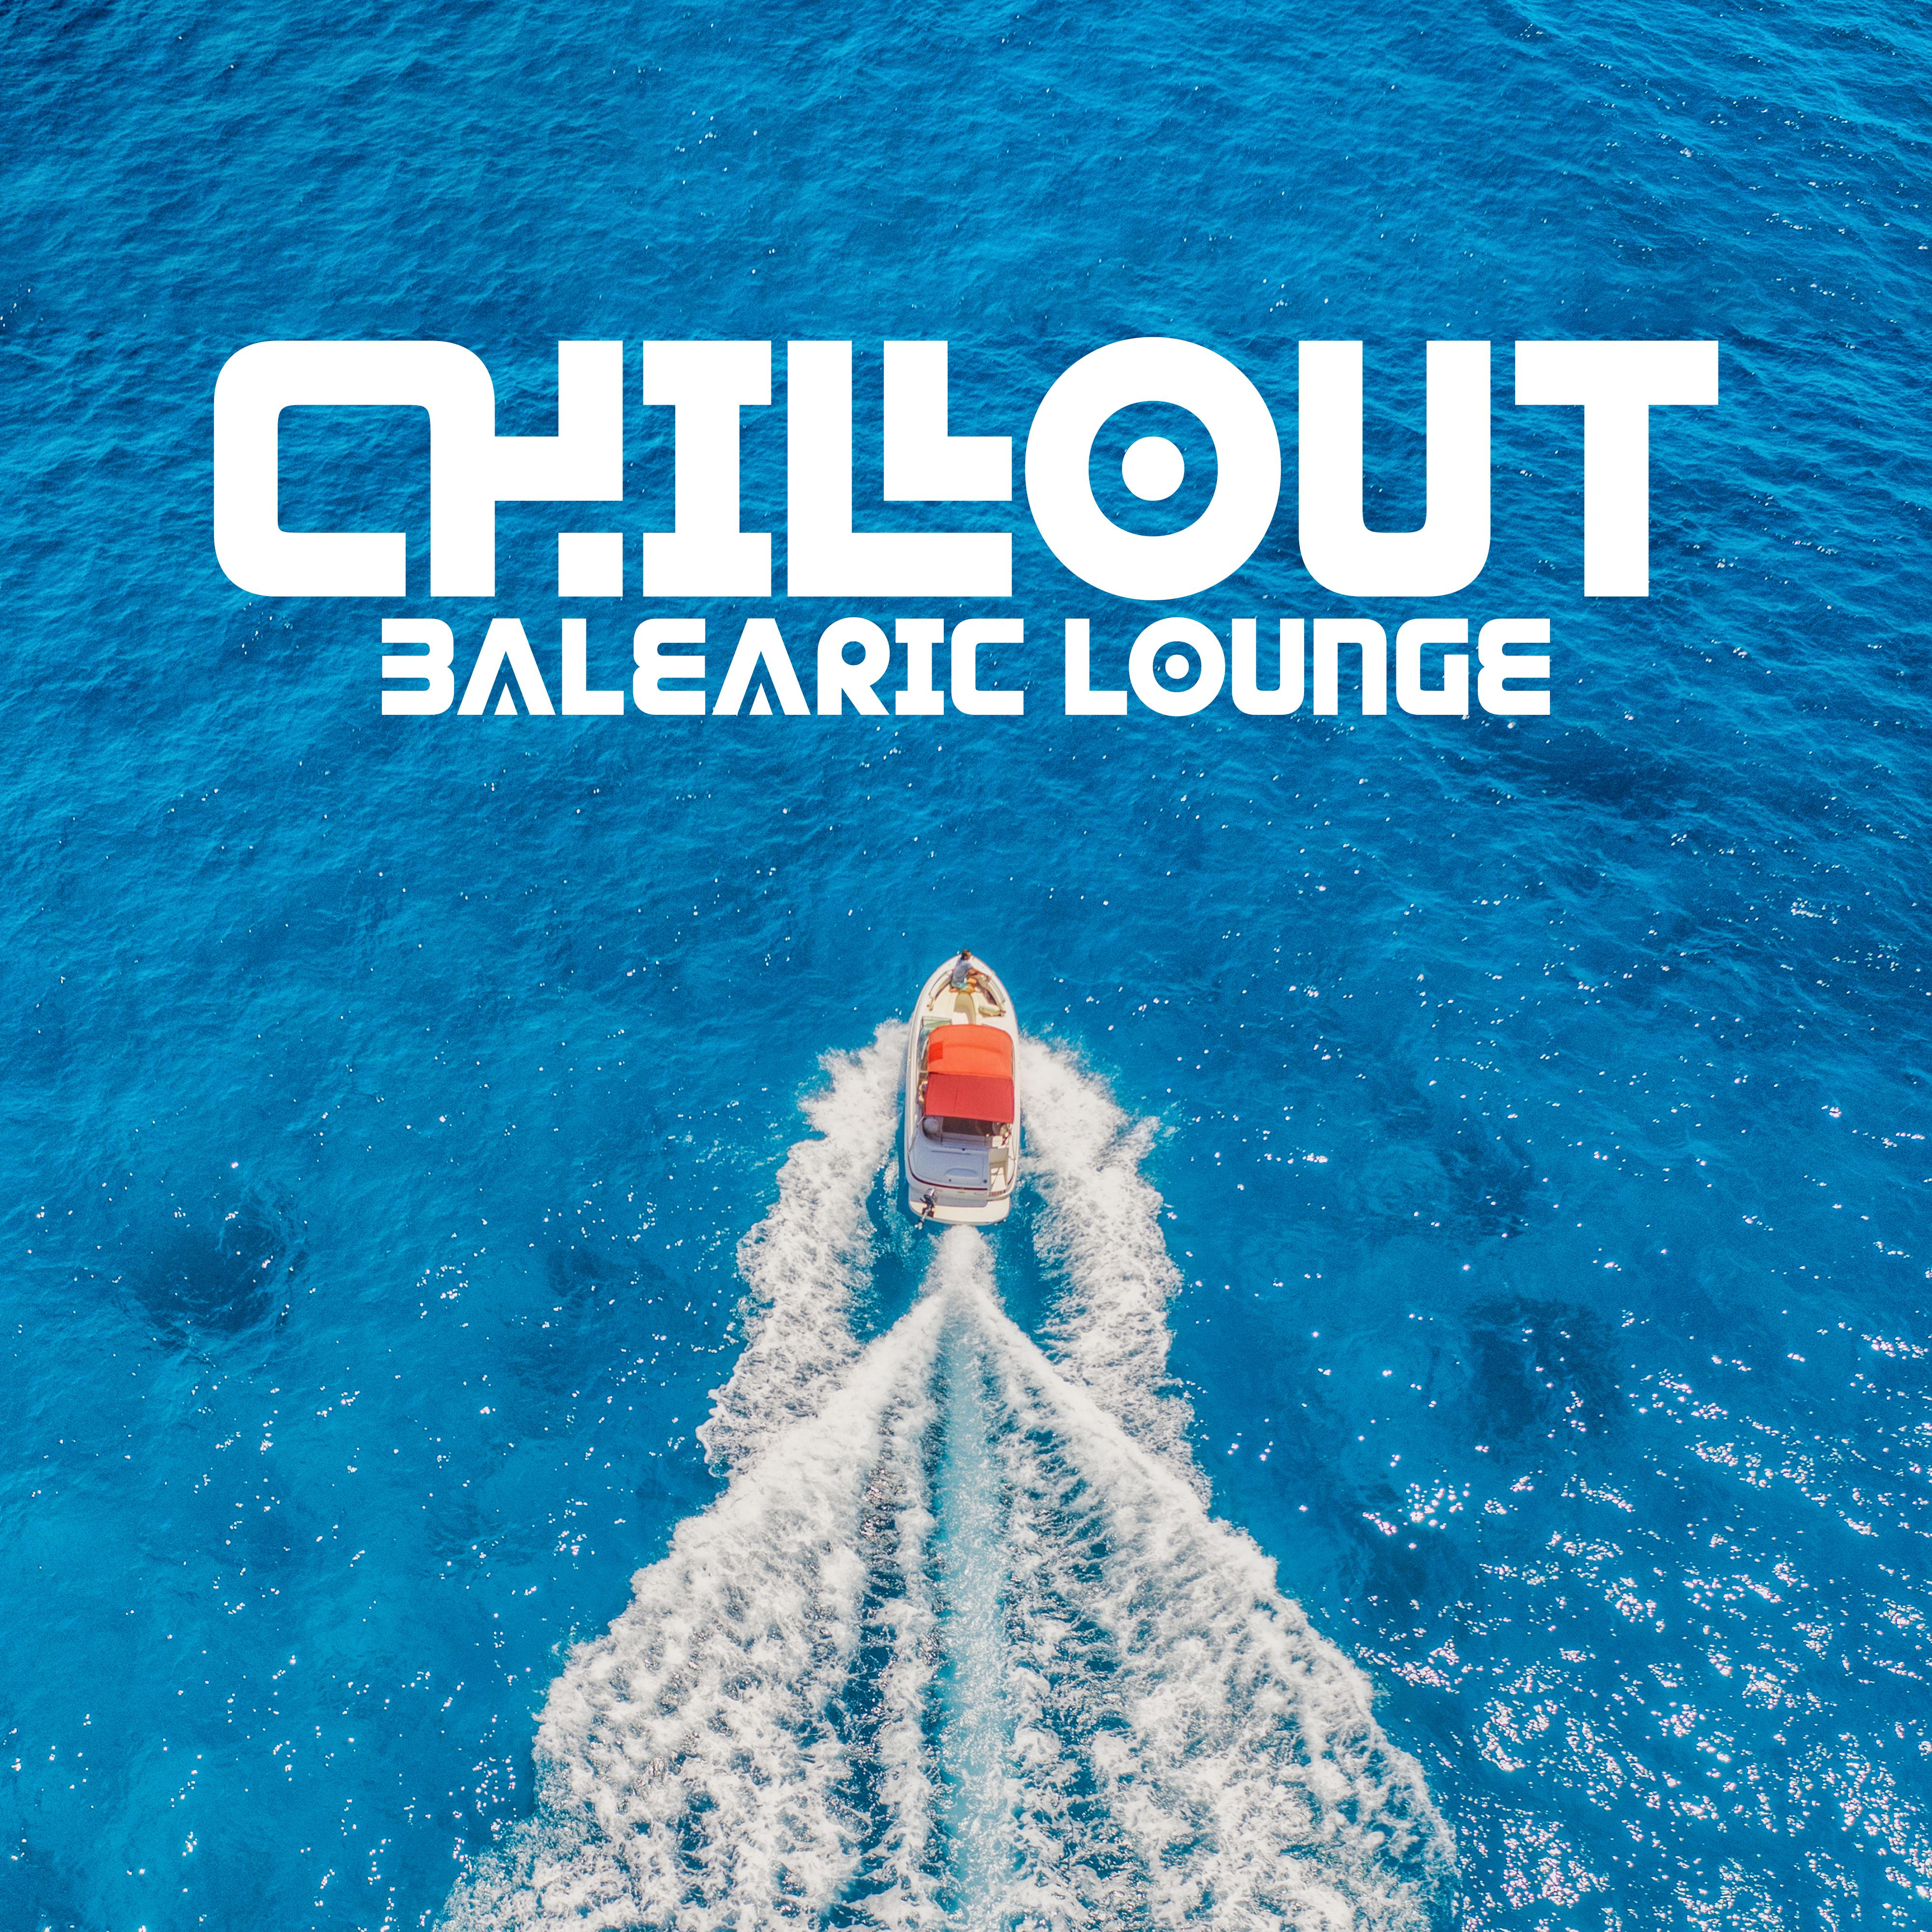 Chillout Balearic Lounge – Música de Fiesta